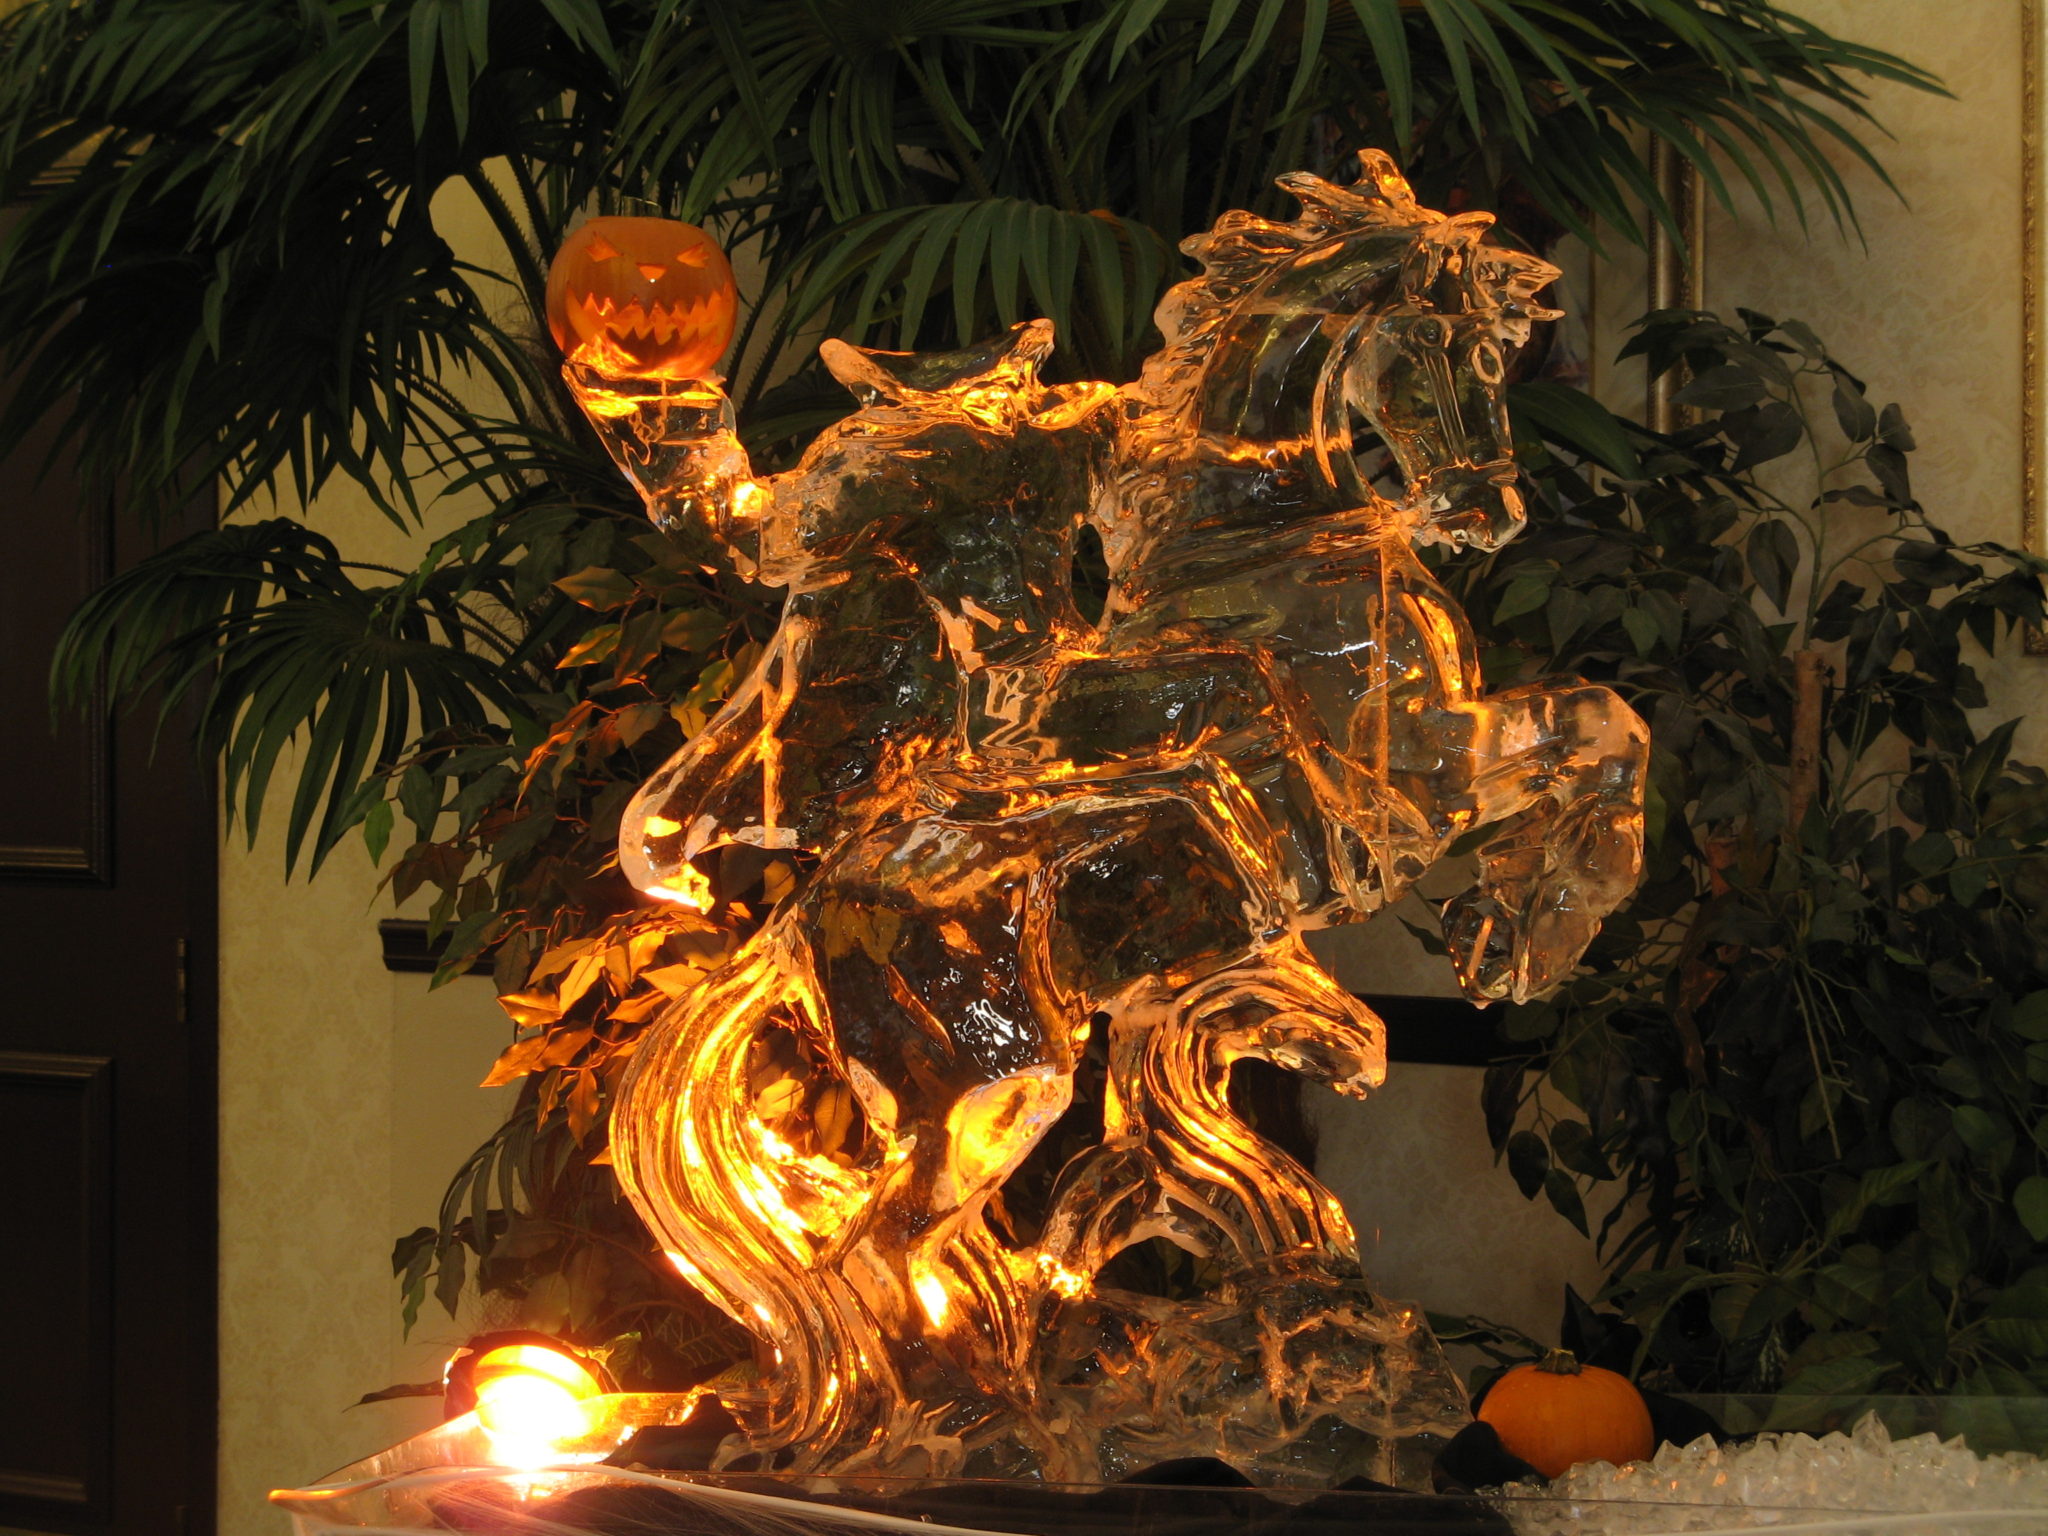 Headless Horseman ice sculpture with carved pumpkin head and orange lighting